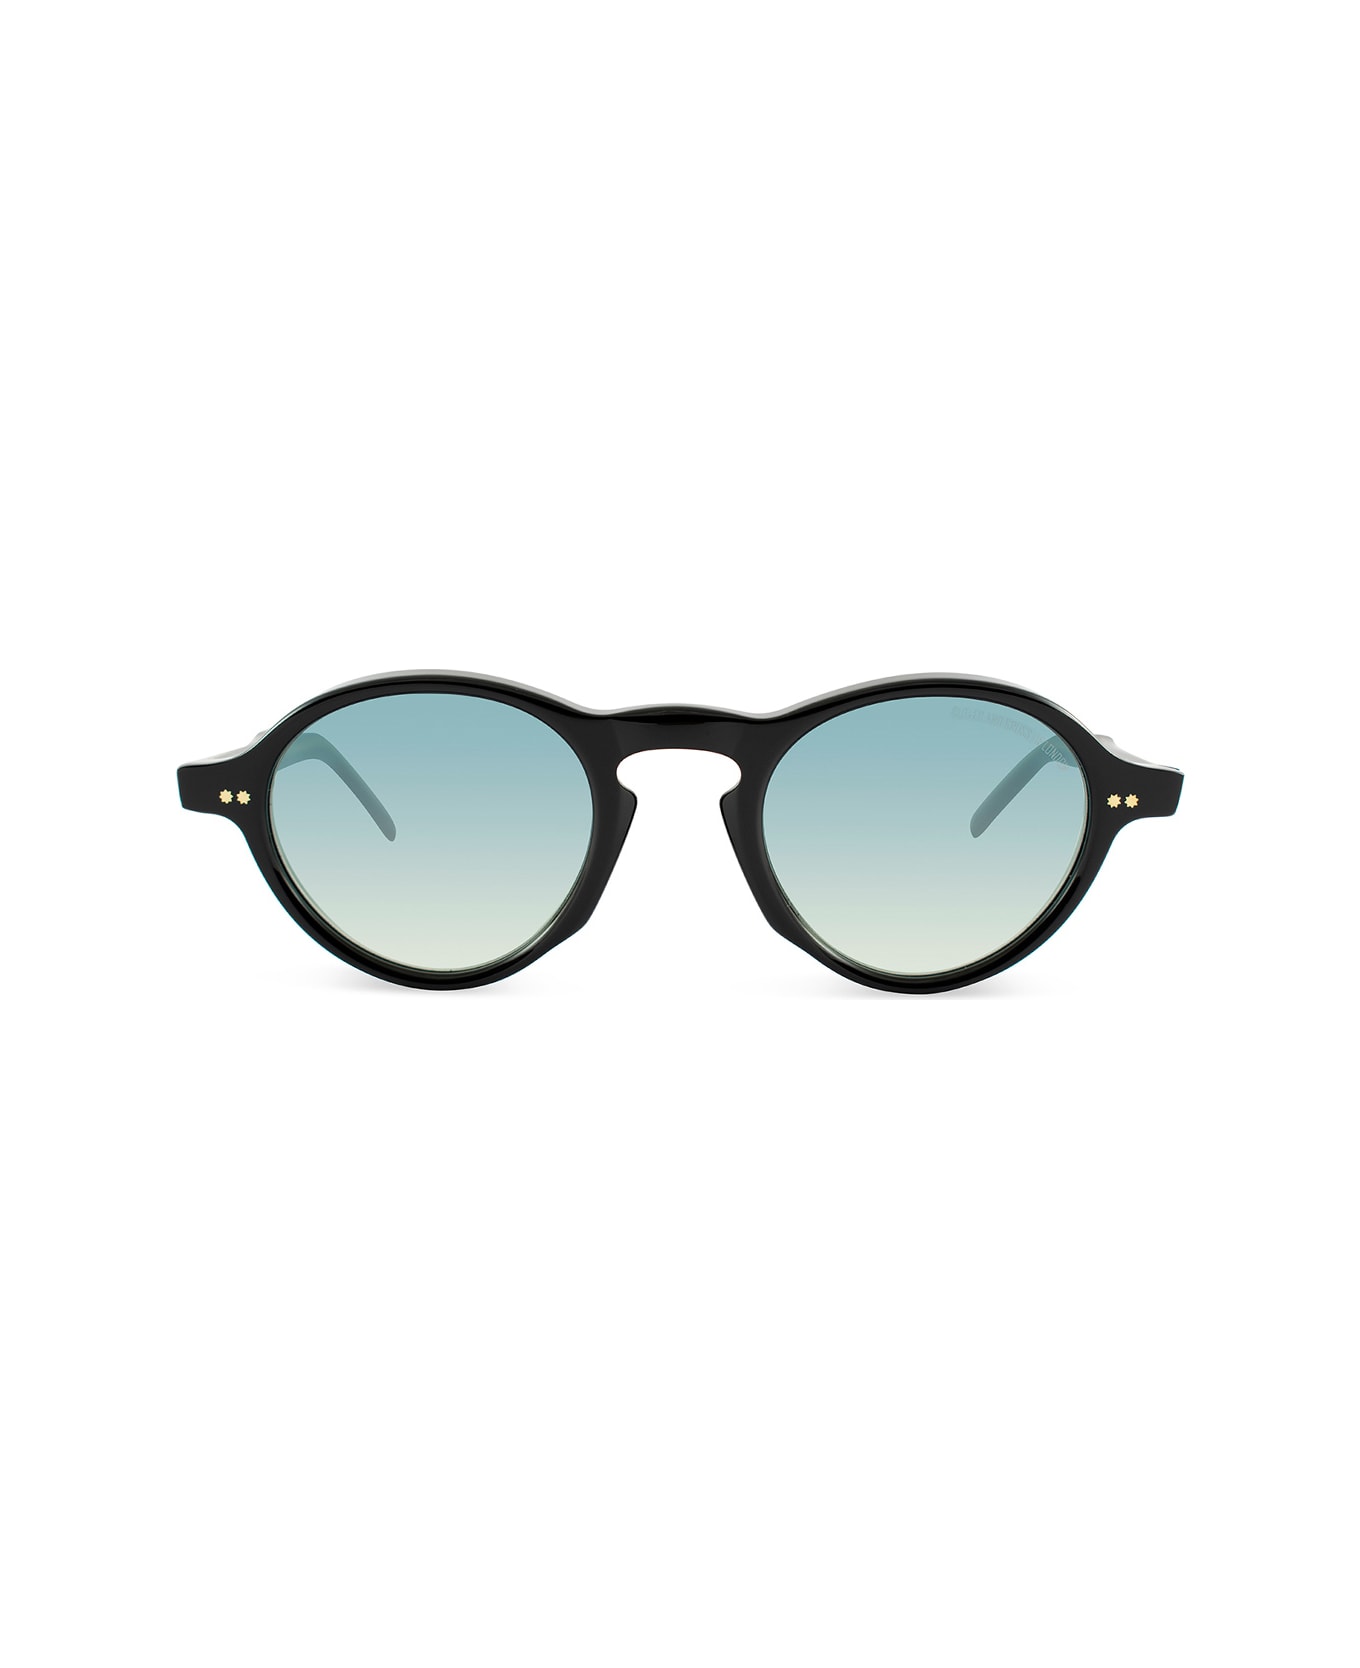 Cutler and Gross Gr08 01 Black Sunglasses - Nero サングラス